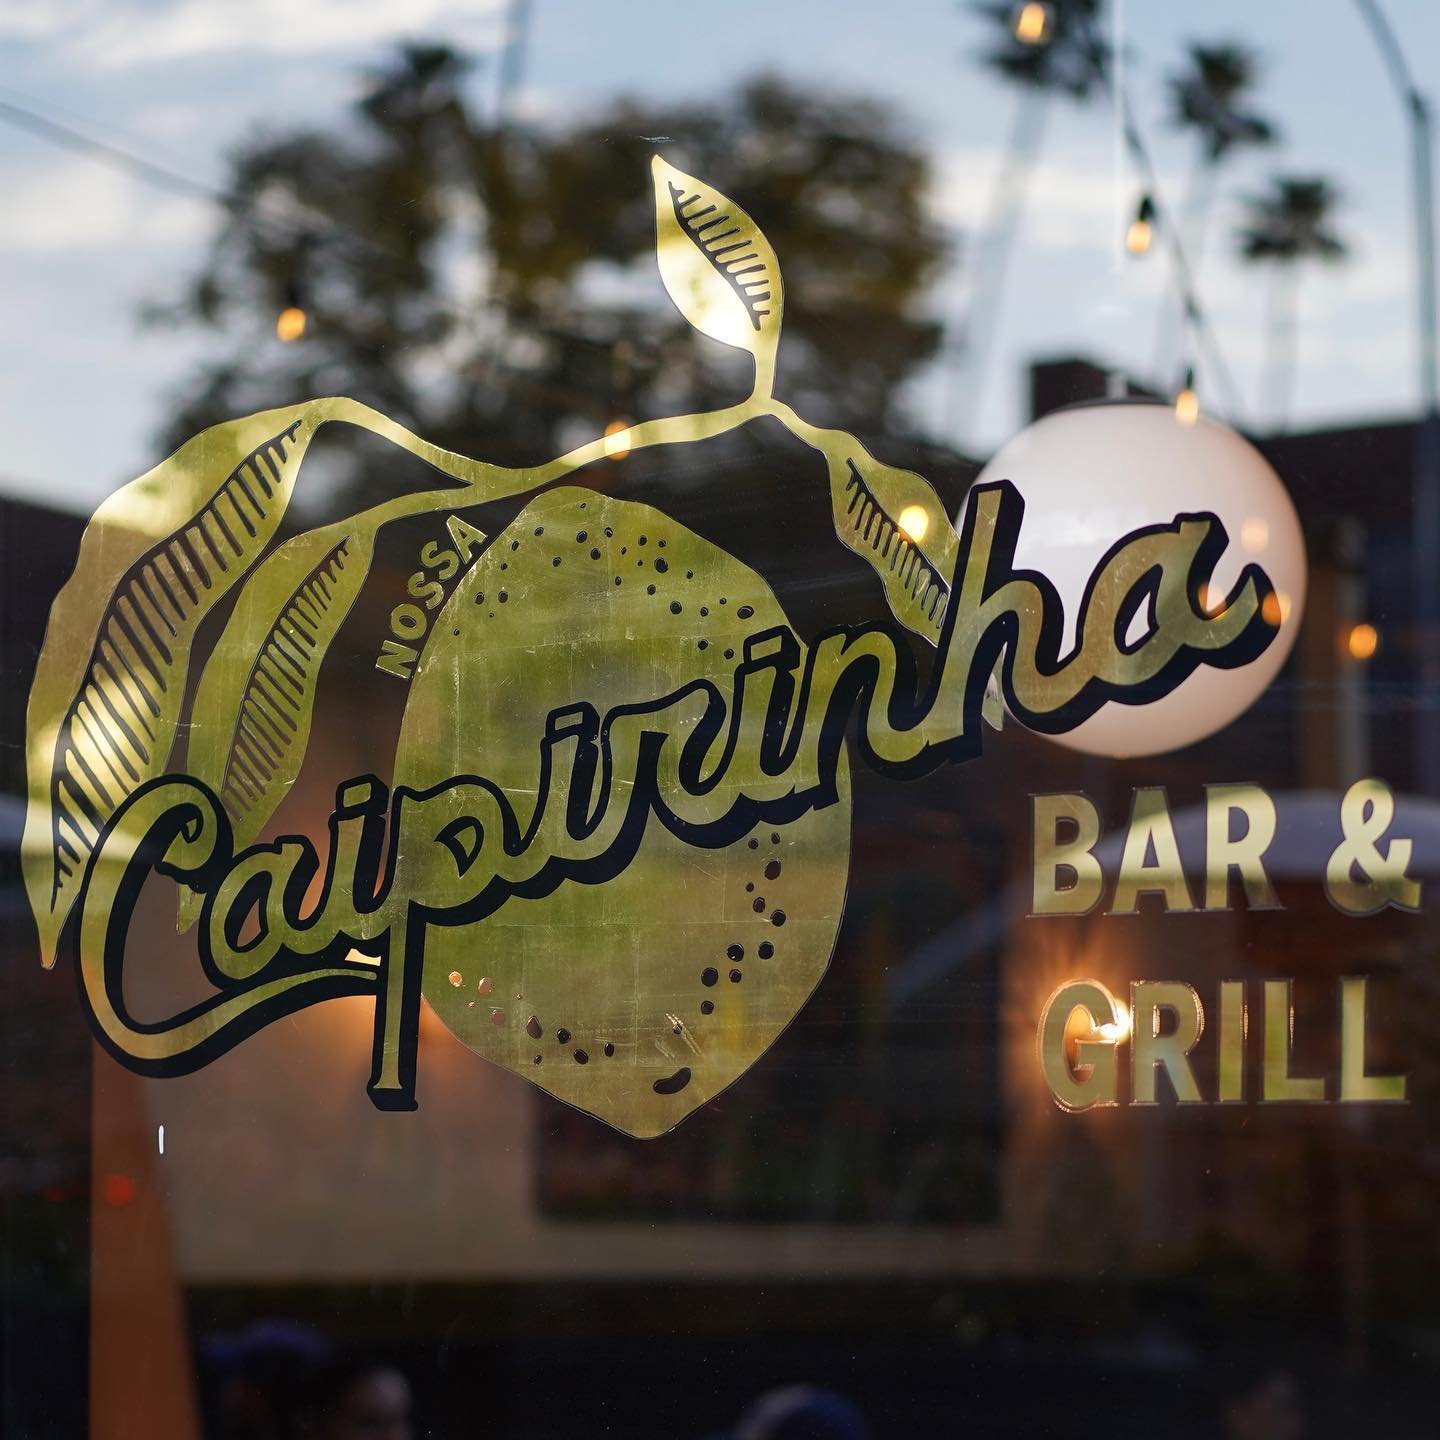 TGIF! Kickstart your weekend with the flavors of Brazil🇧🇷🍽️ Come to Nossa Caipirinha Bar! Open until midnight tonight😎
📸: @myheezy